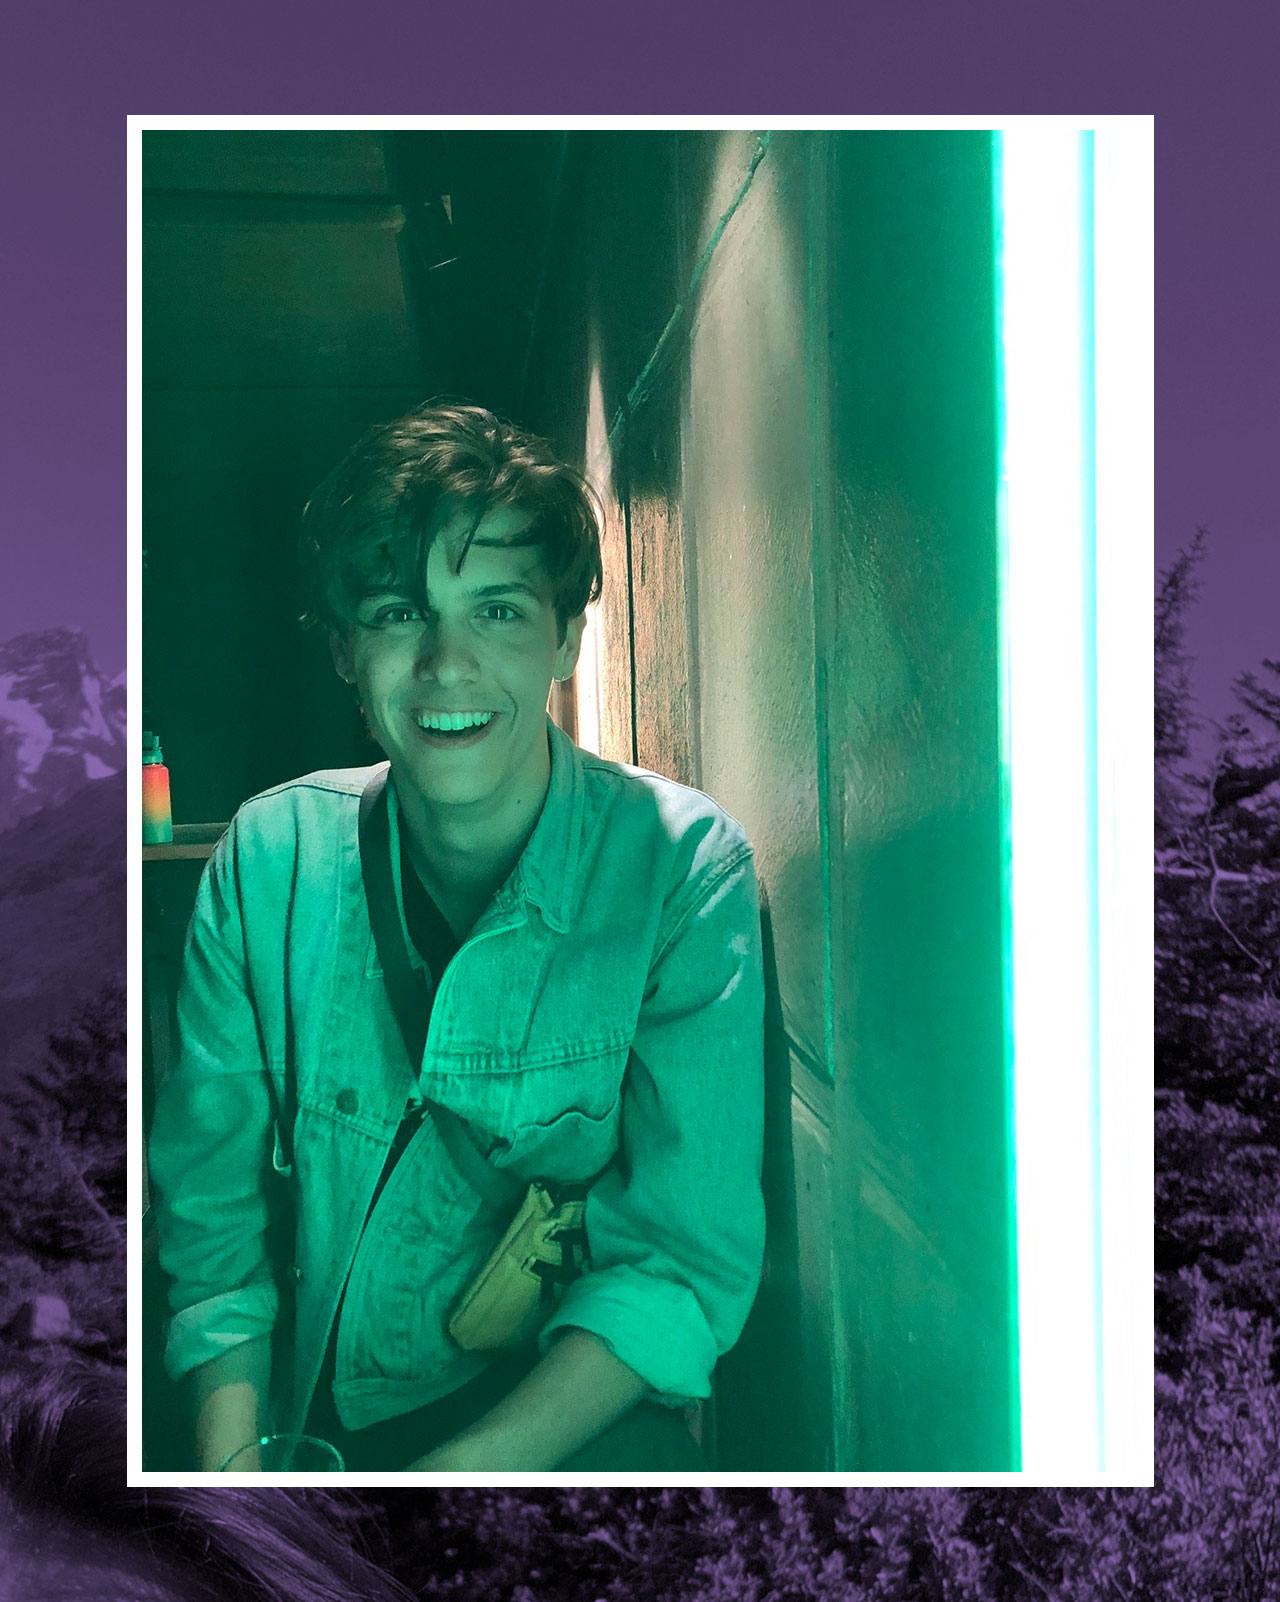 NYU Steinhardt student Justin Kipp posing in front of a vibrant green neon light.